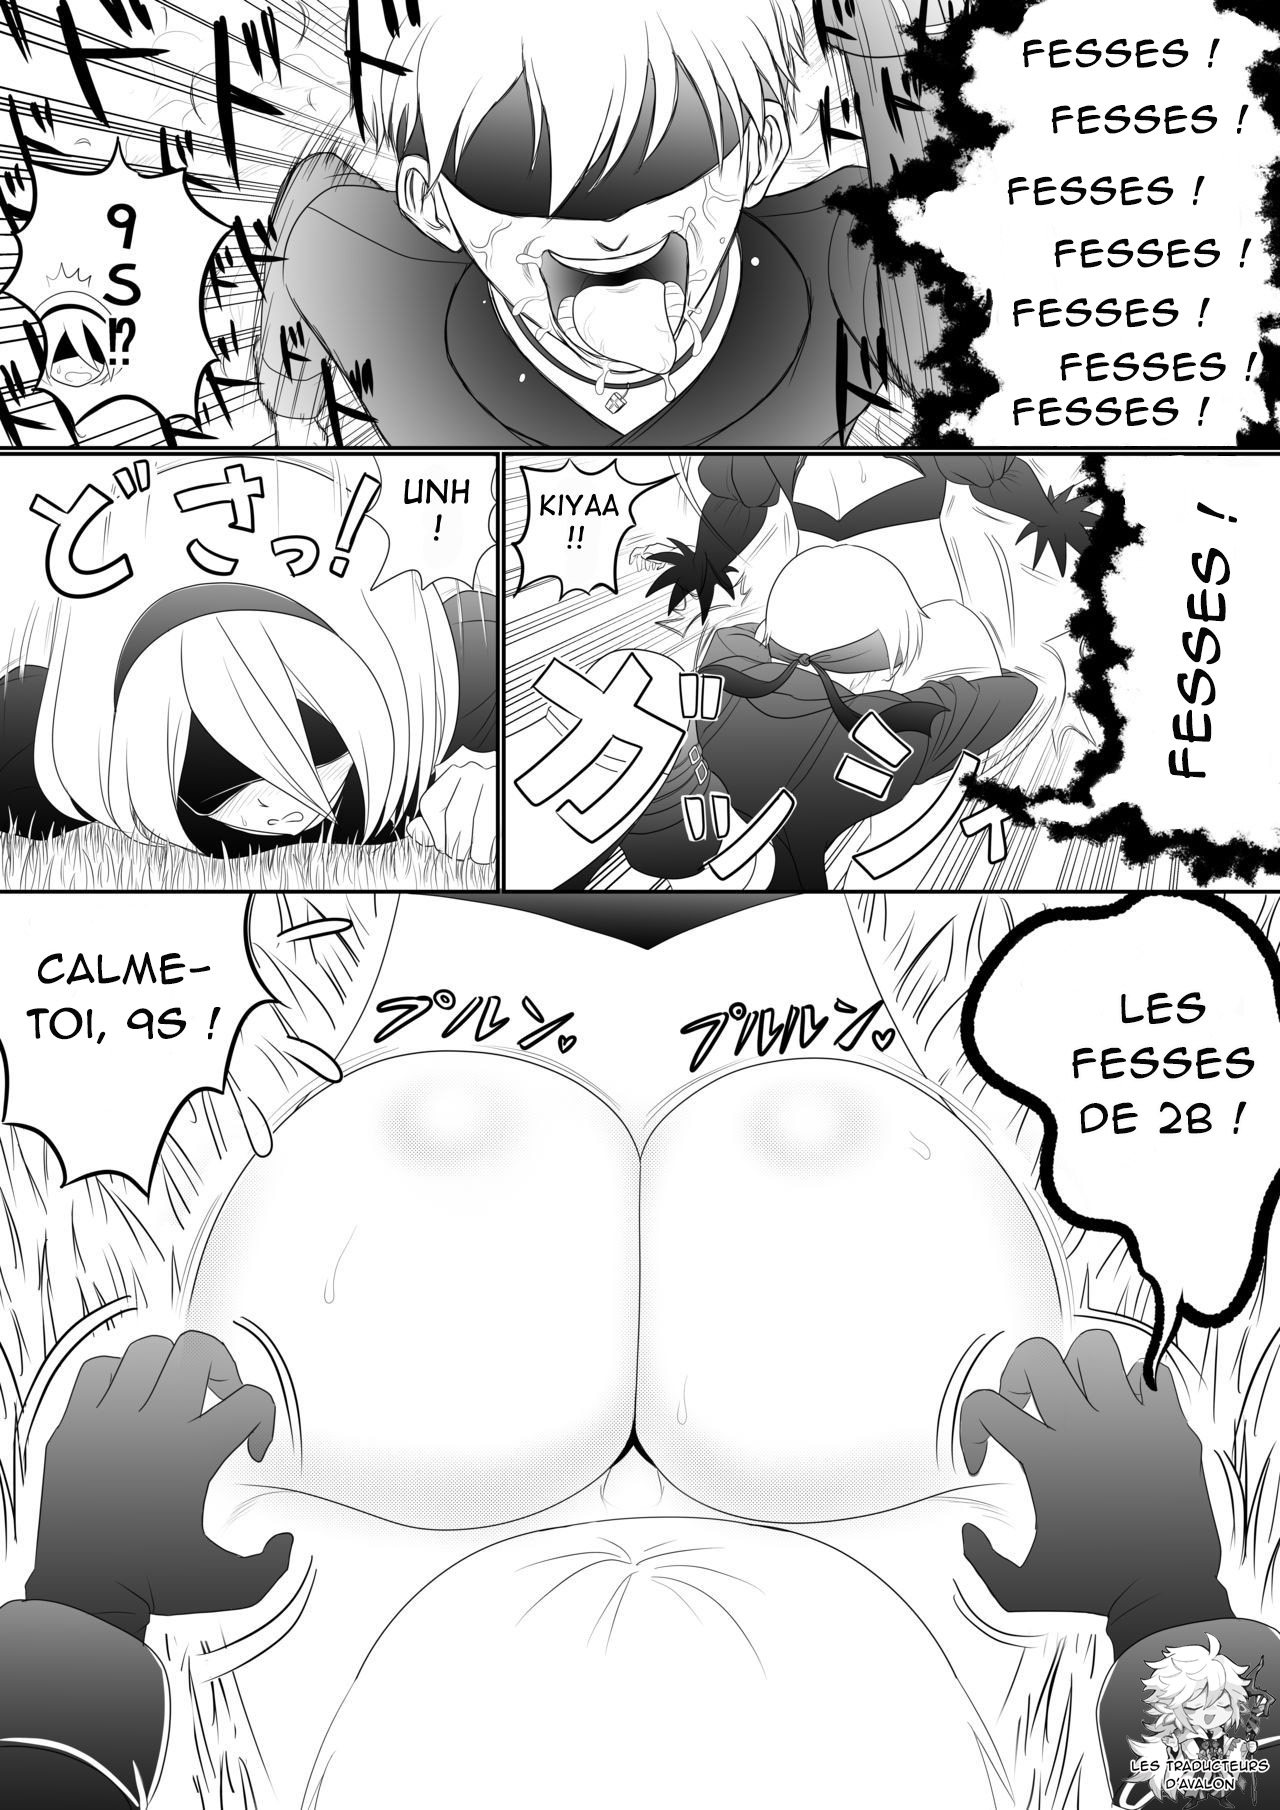 Automata Manga Oshiri Hen  Automata Manga: The Ass Edition numero d'image 1